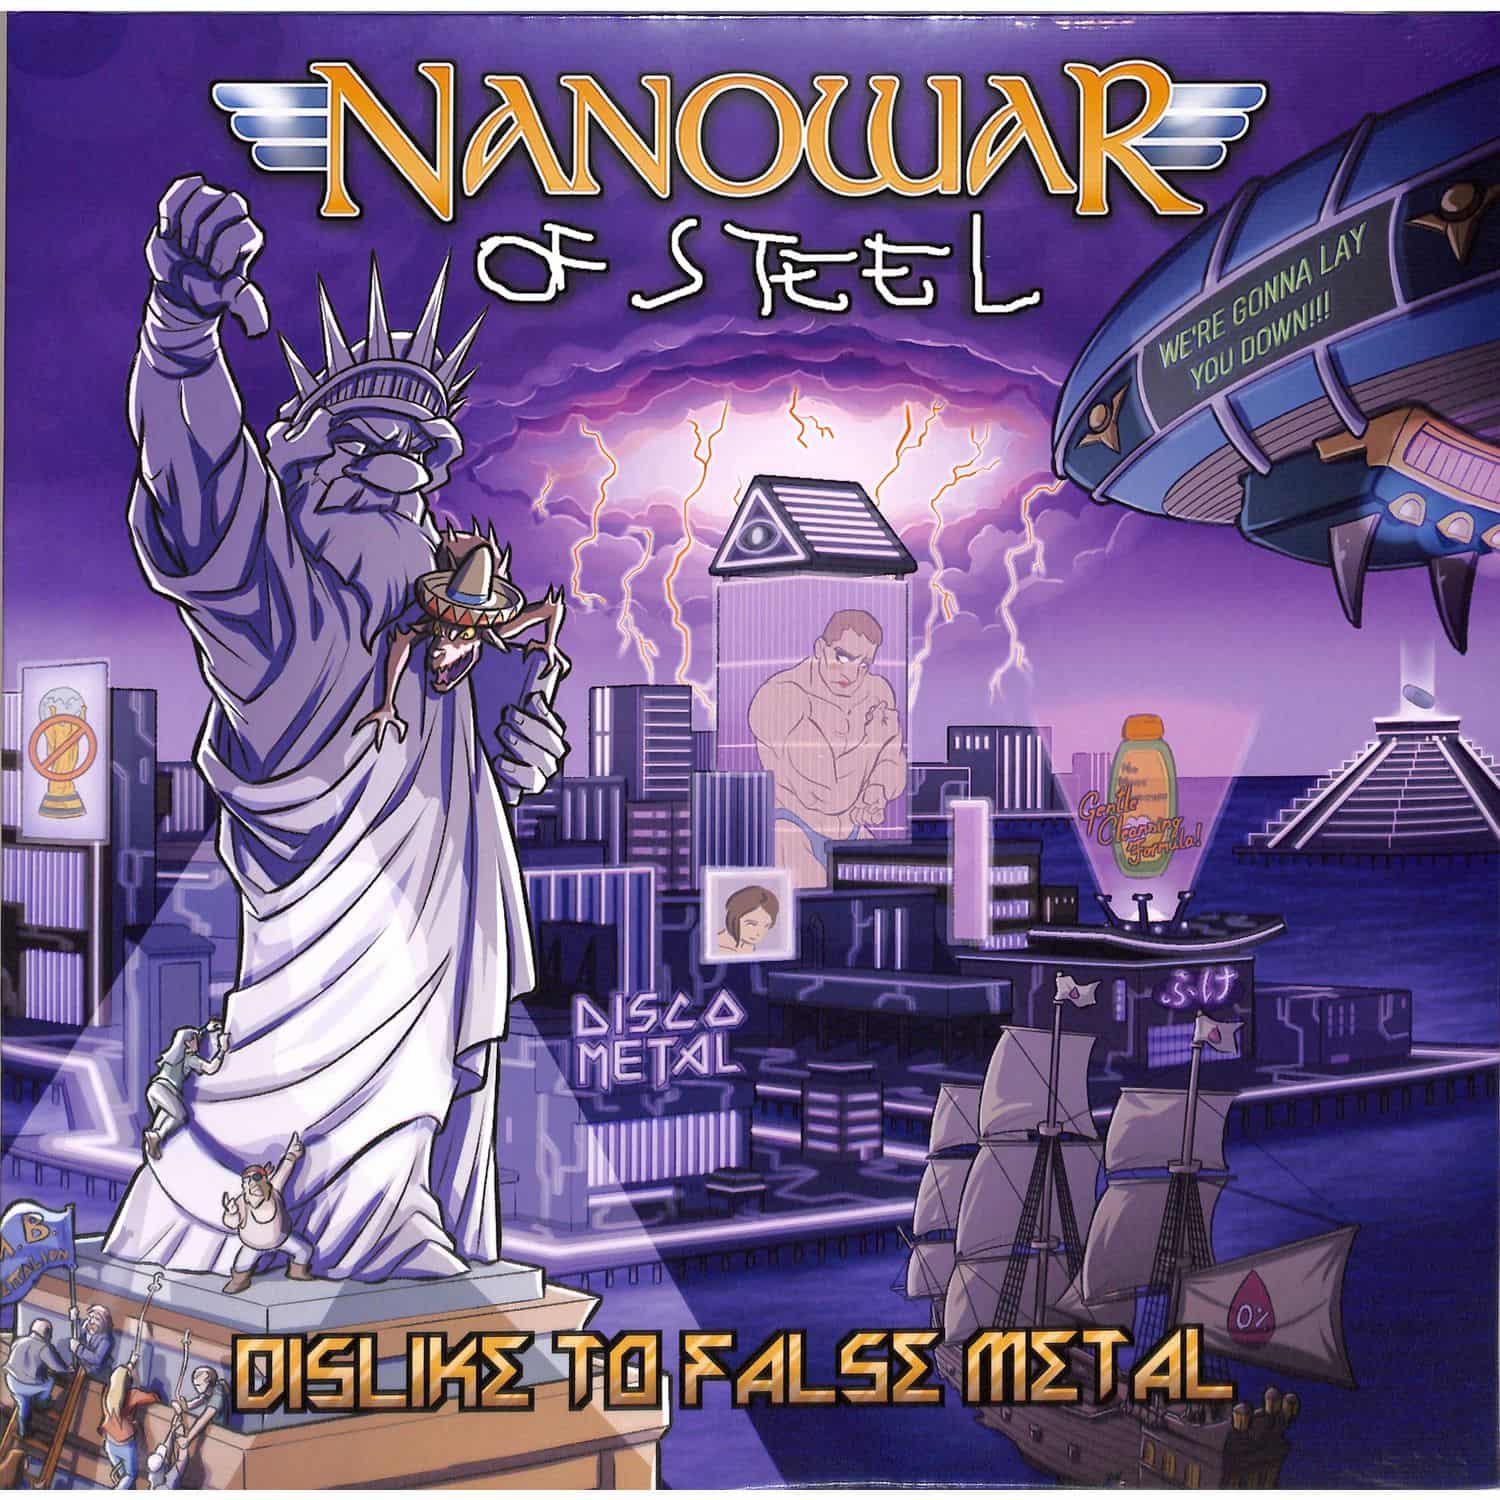 Nanowar Of Steel - DISLIKE TO FALSE METAL 